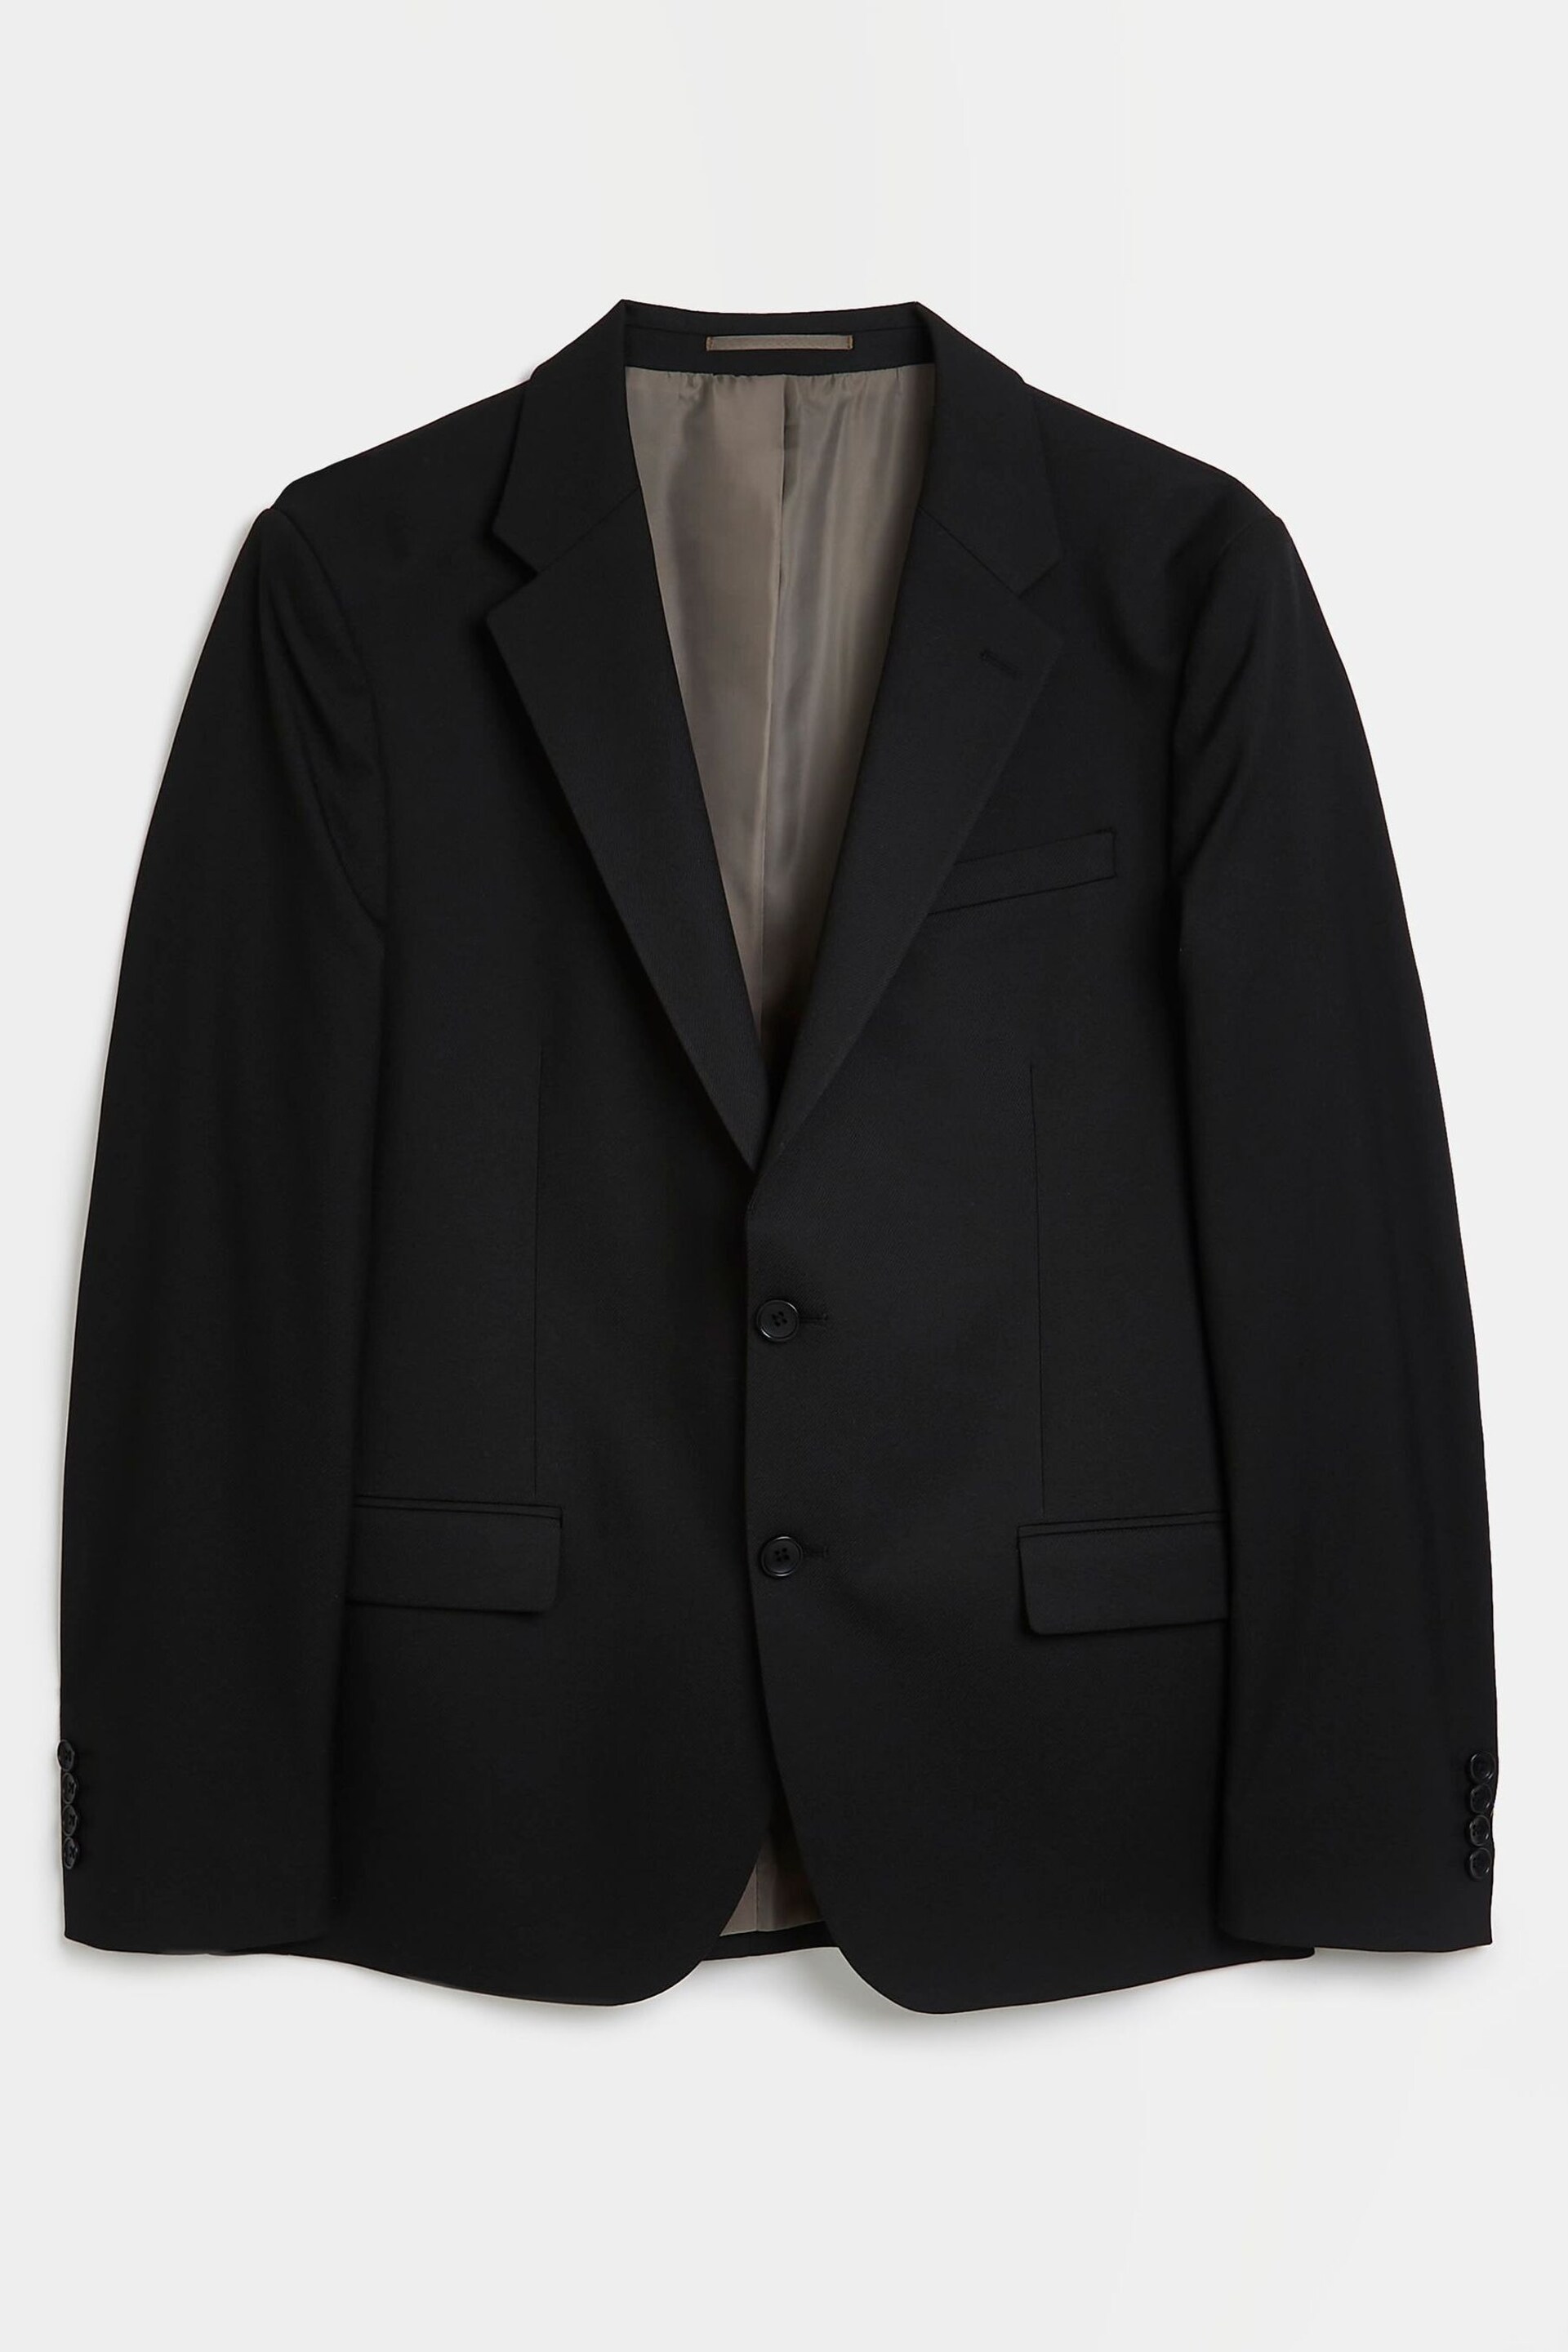 River Island Black Skinny Twill Suit: Jacket - Image 4 of 4